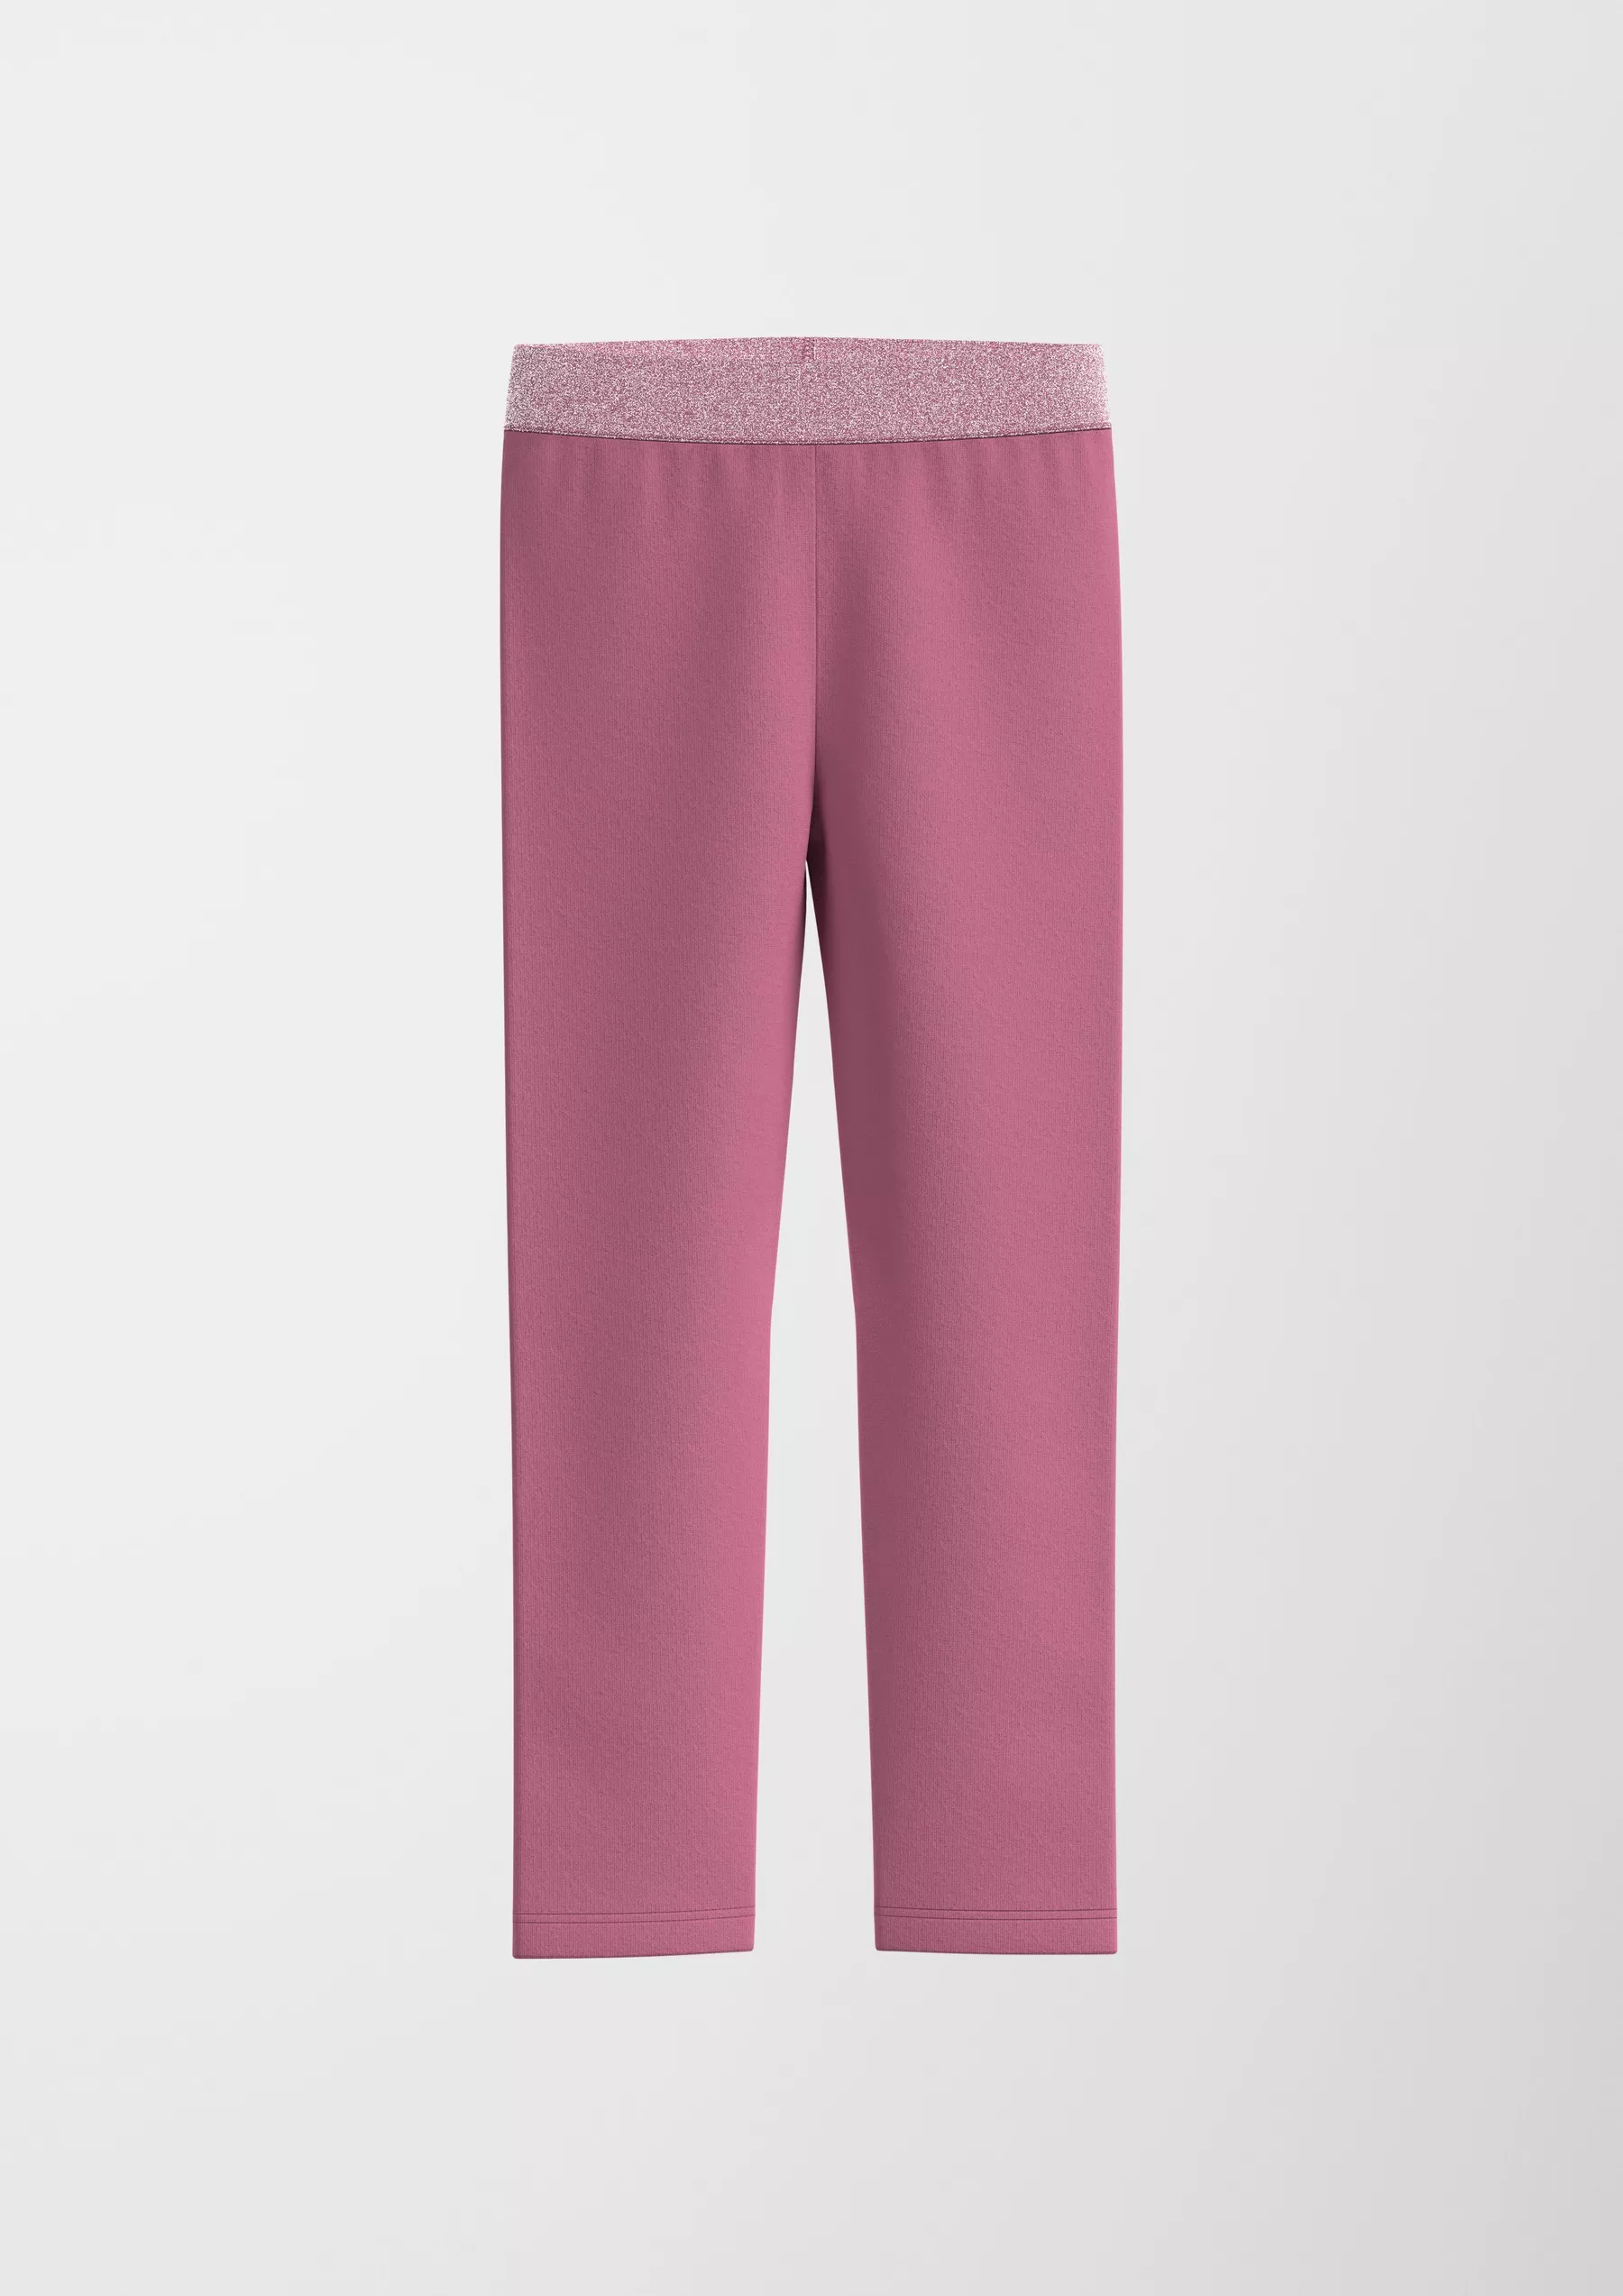 Лосины QS by s. Oliver для девочек, размер 116, розовый, 2133919 лосины soft cover beself розовый